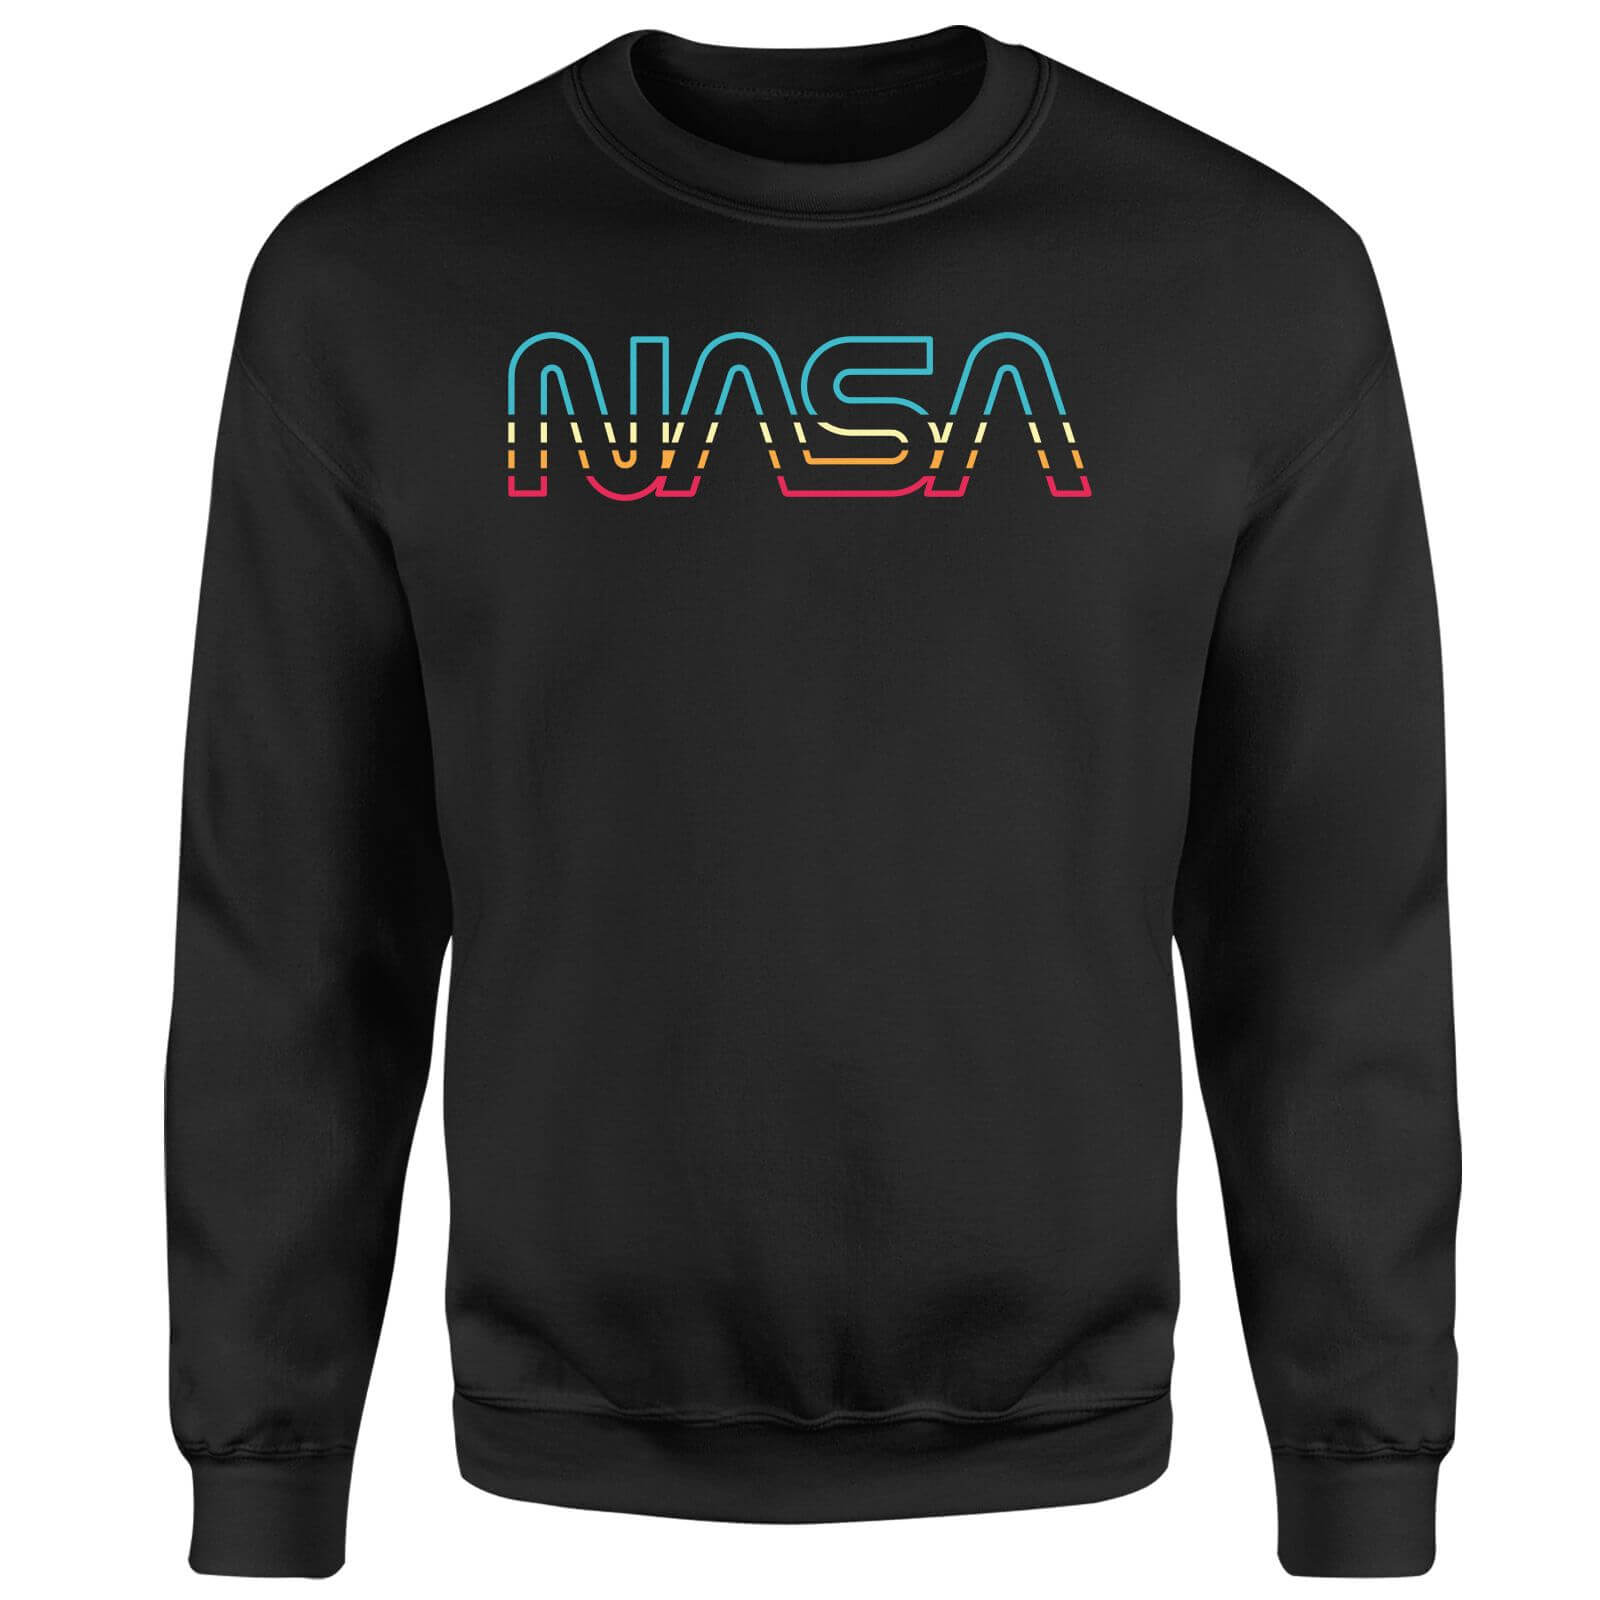 NASA Spectrum Sweatshirt - Black - S - Black